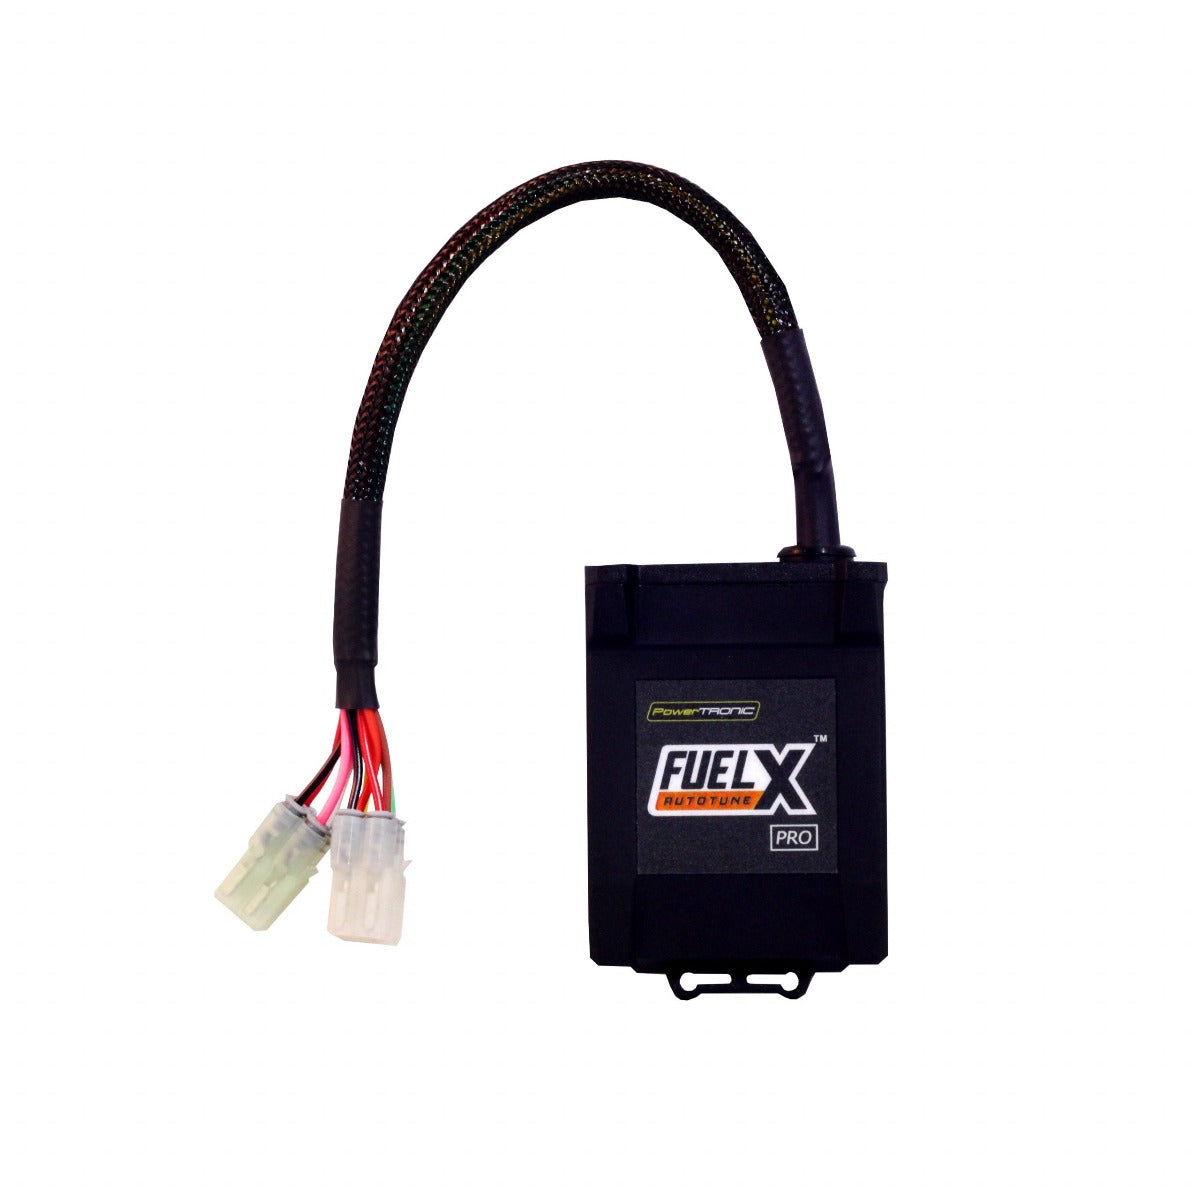 FuelX Autotune Pro Fuel Injection Optimizer for Yamaha - 1